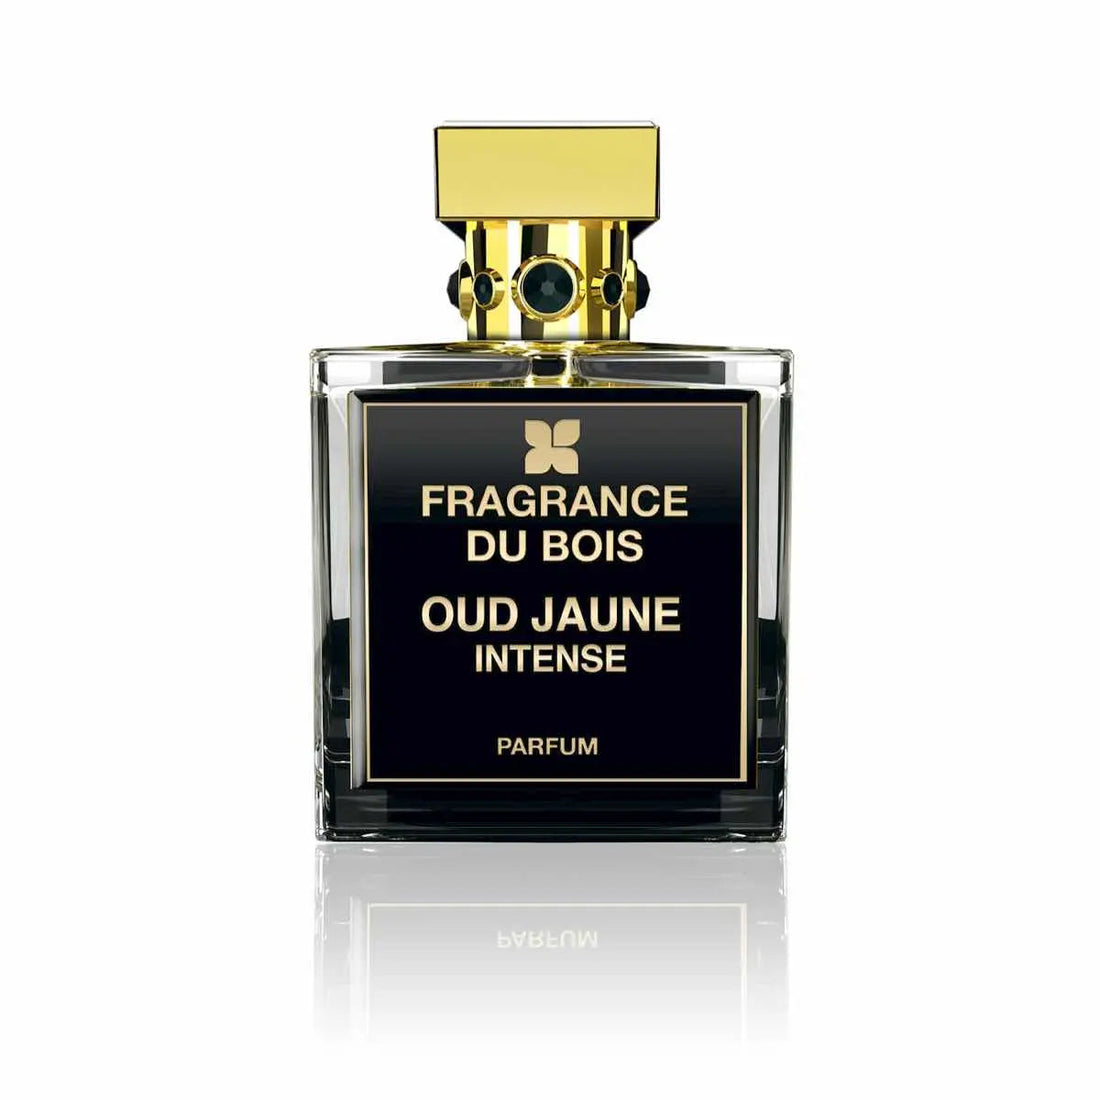 Fragrance du bois Oud Jaune parfum - 50 ml